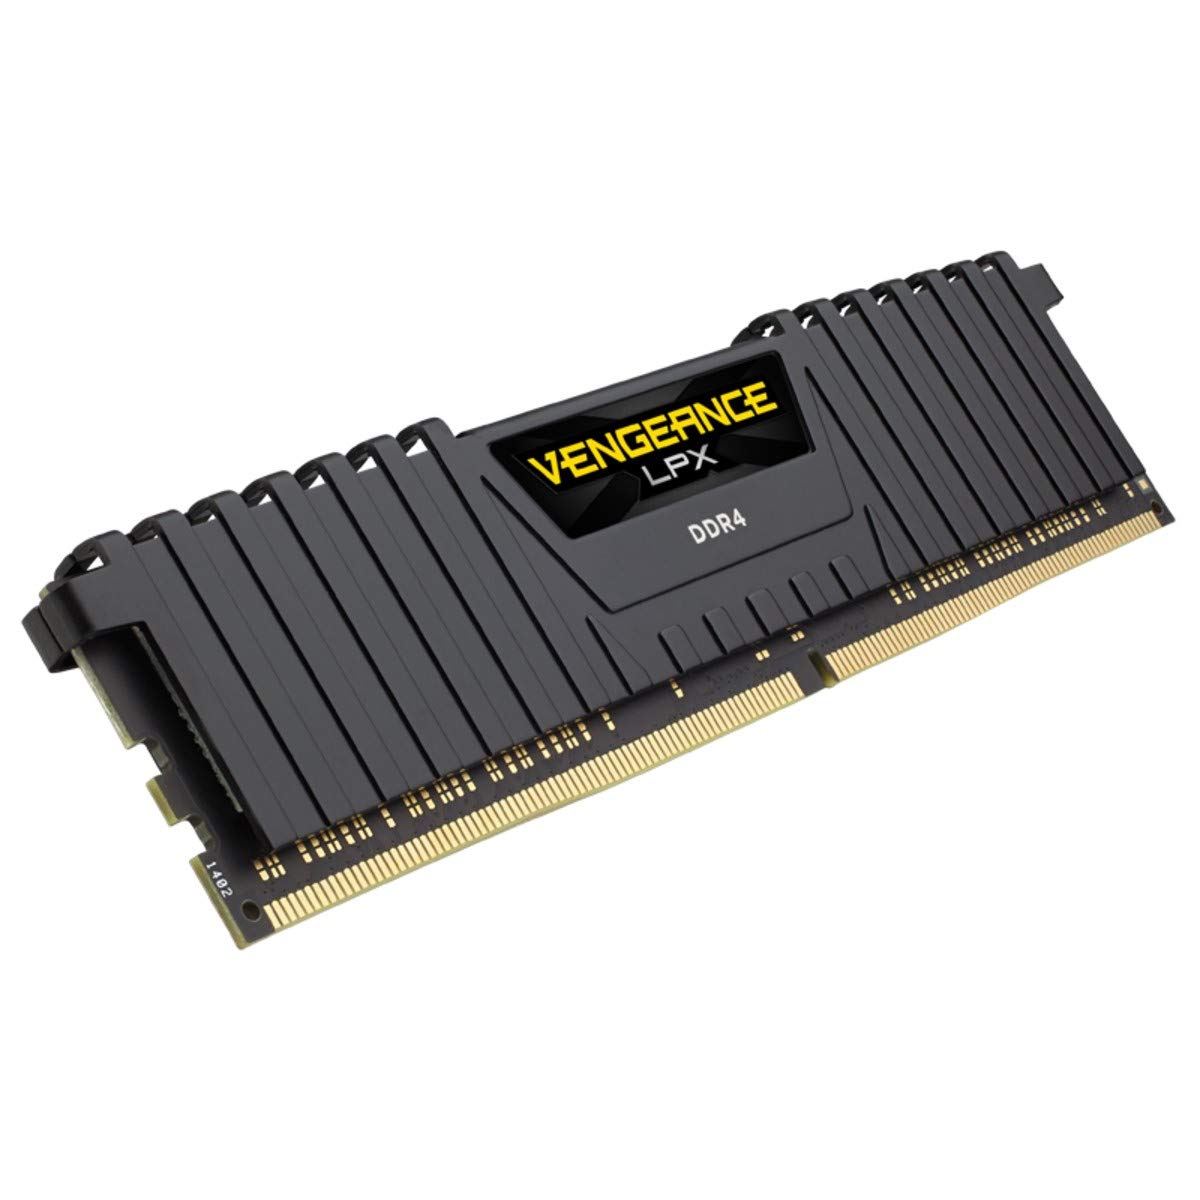 CORSAIR DDR4 メモリモジュール VENGEANCE LPX シリーズ 16GB1枚キット CMK16GX4M1A2400C14並行輸入品